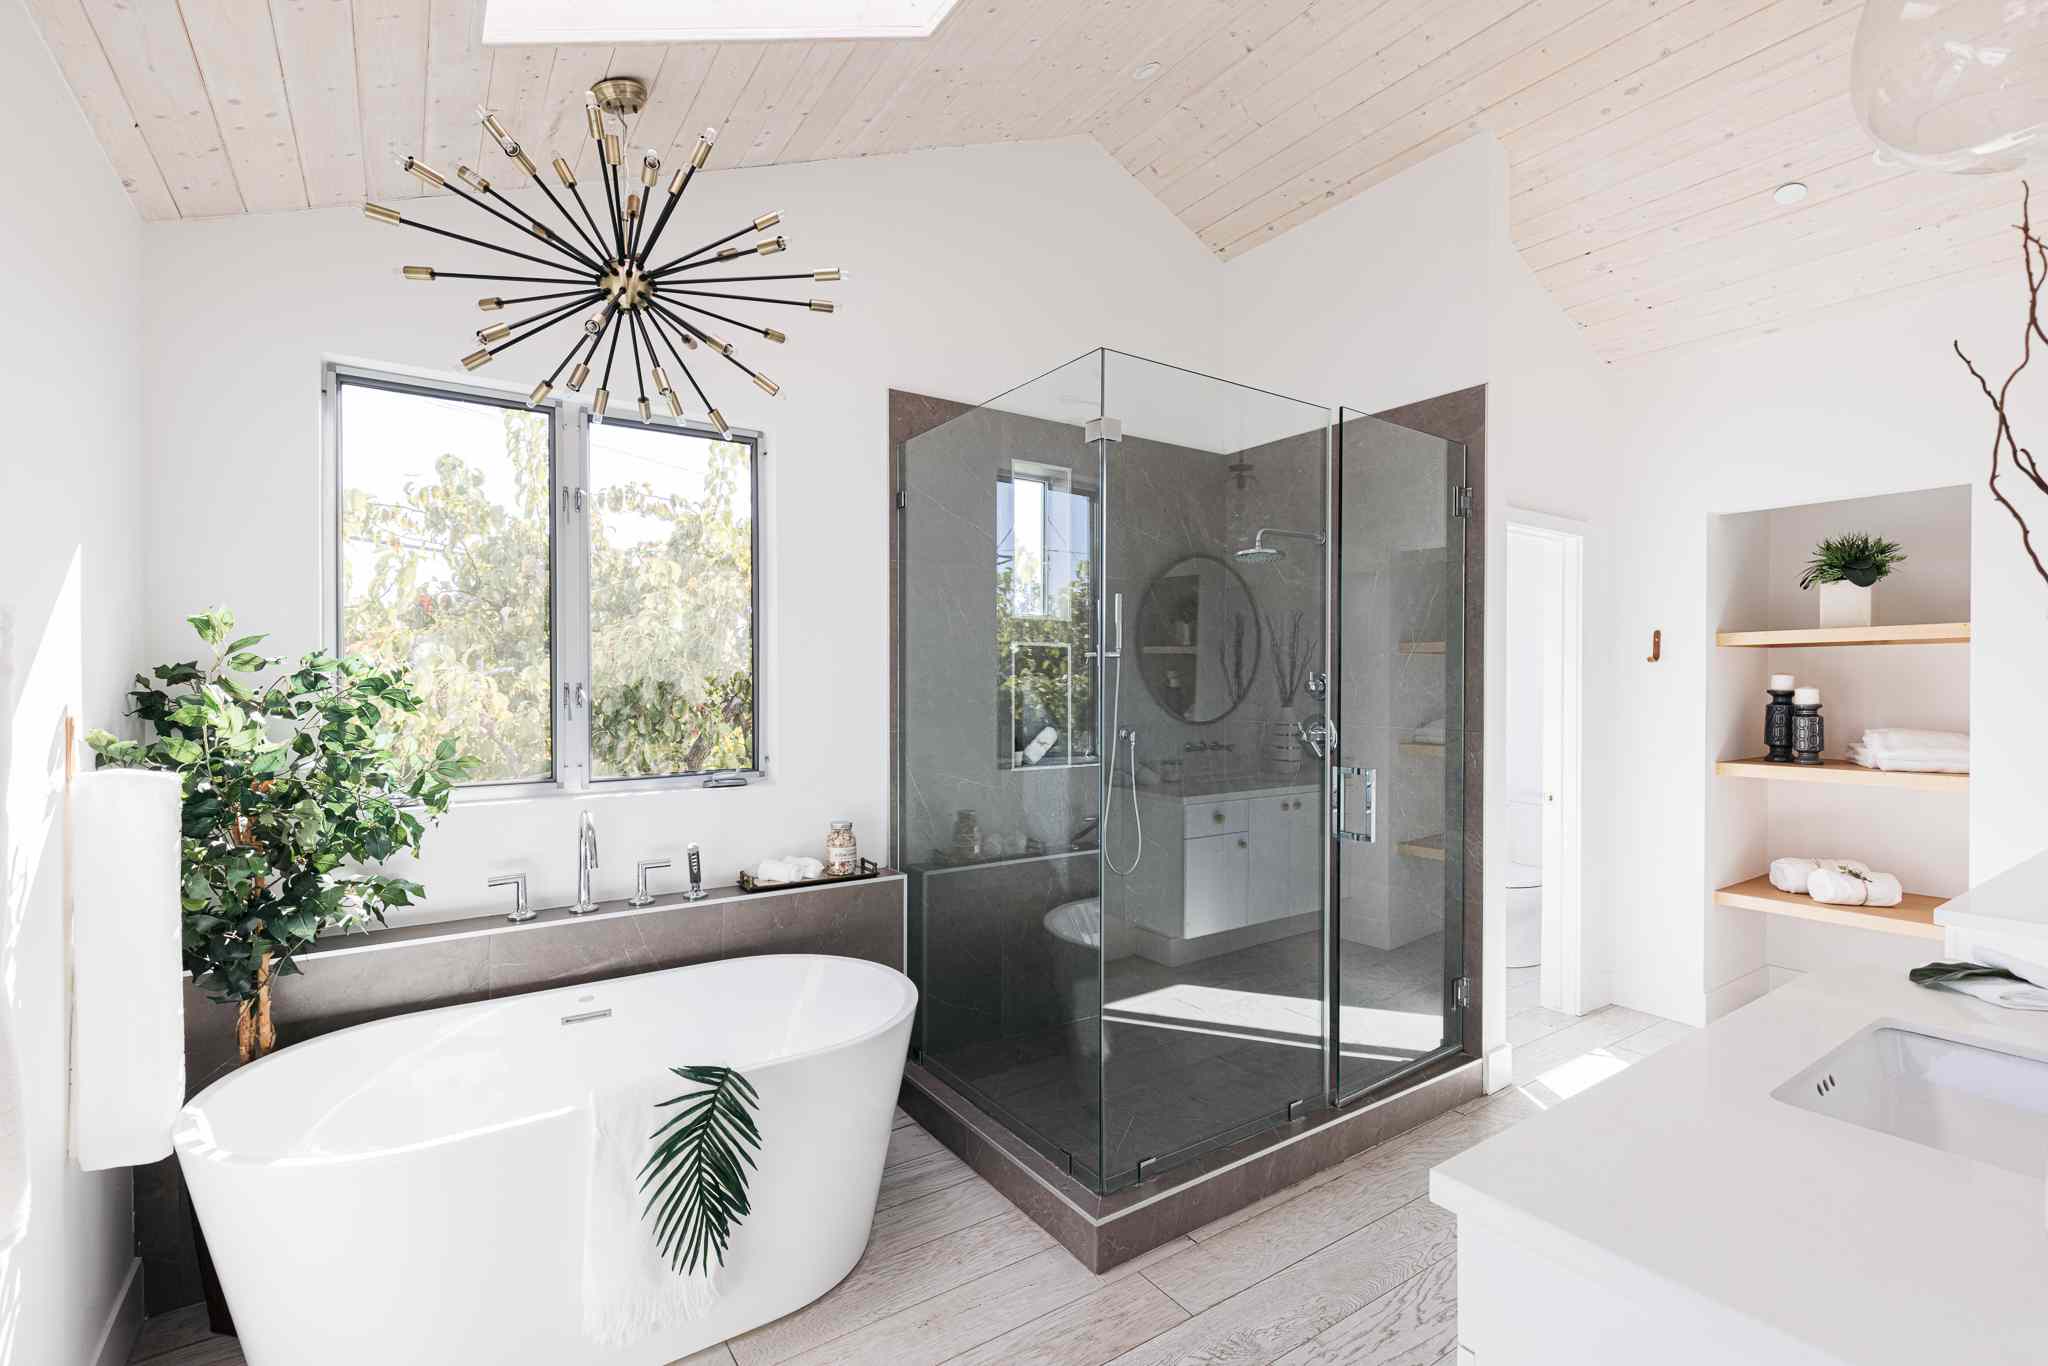 Modern bathroom with spa-inspired features such as rainfall showerhead, deep soaking tub, and heated floors